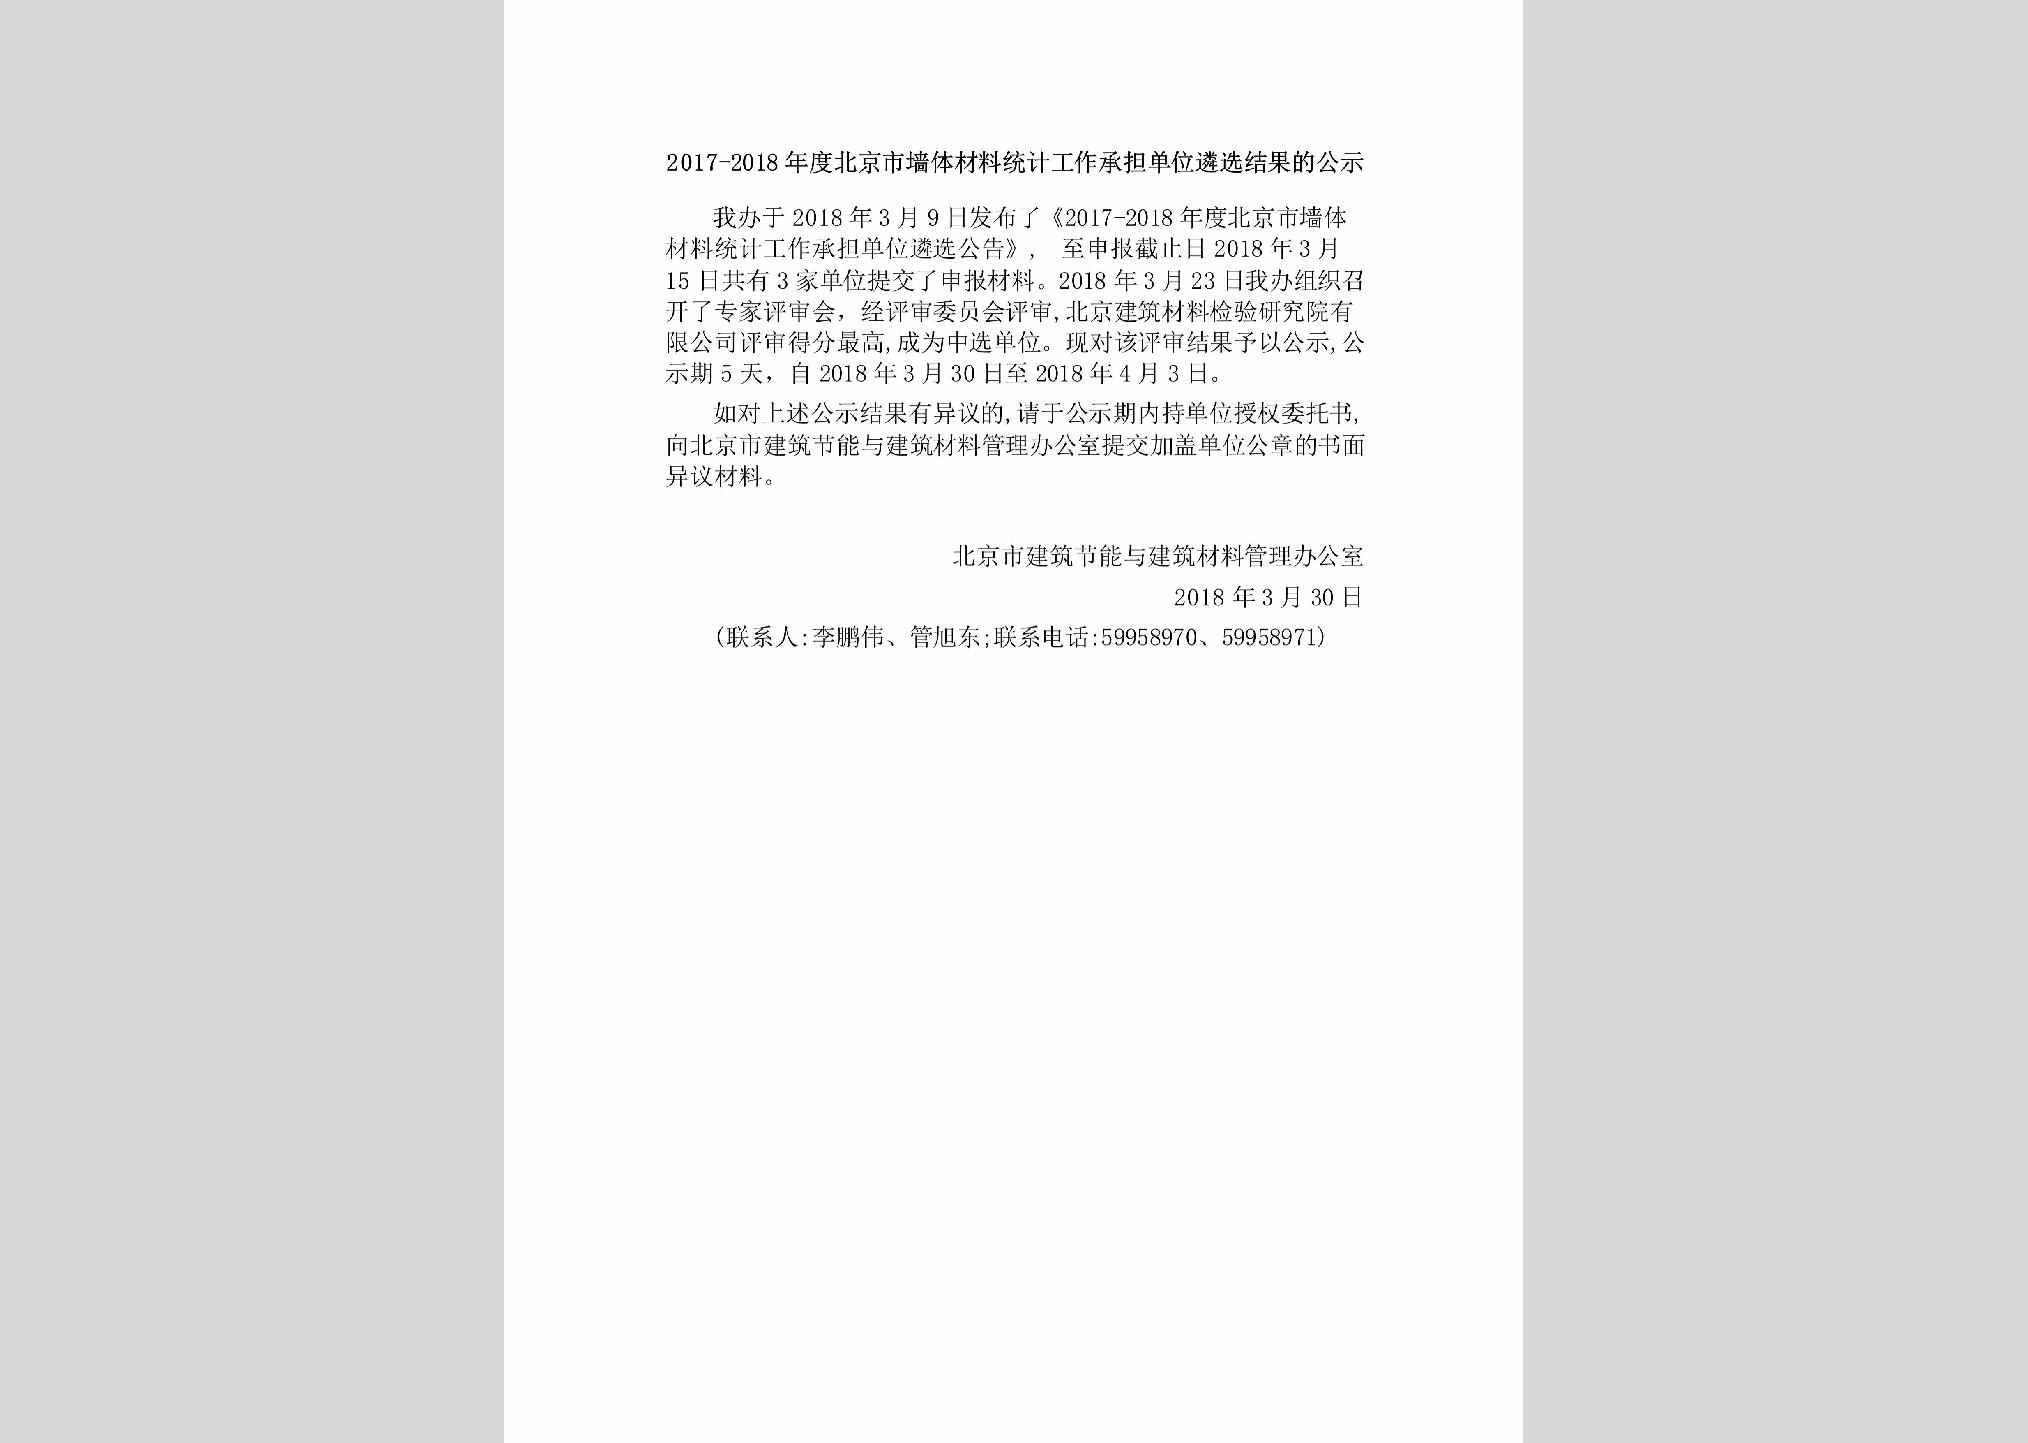 BJ-QTCLTJLXJG-2018：2017-2018年度北京市墙体材料统计工作承担单位遴选结果的公示